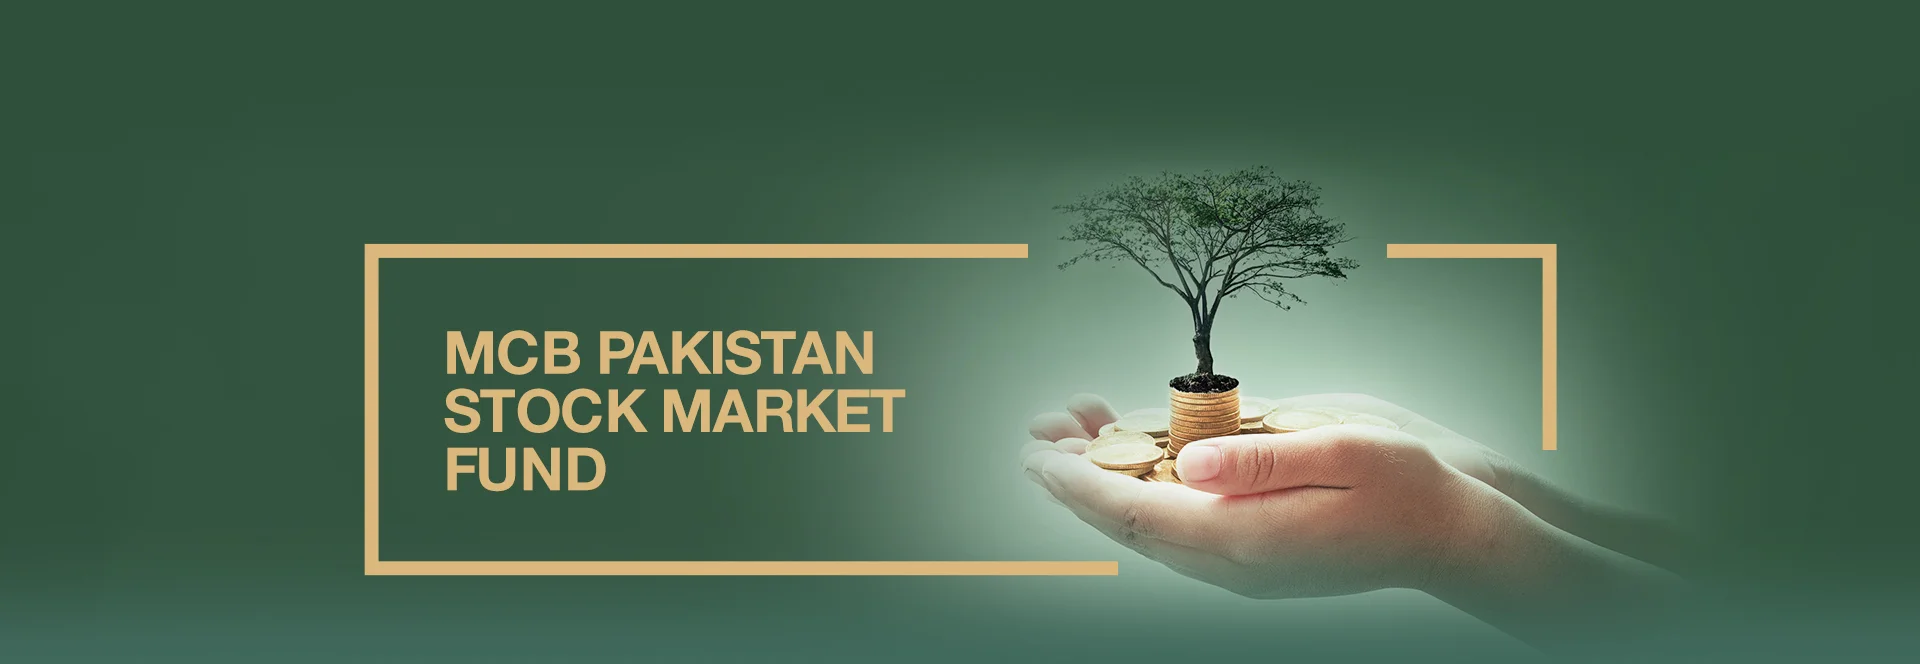 MCB Pakistan Stock Market Fund